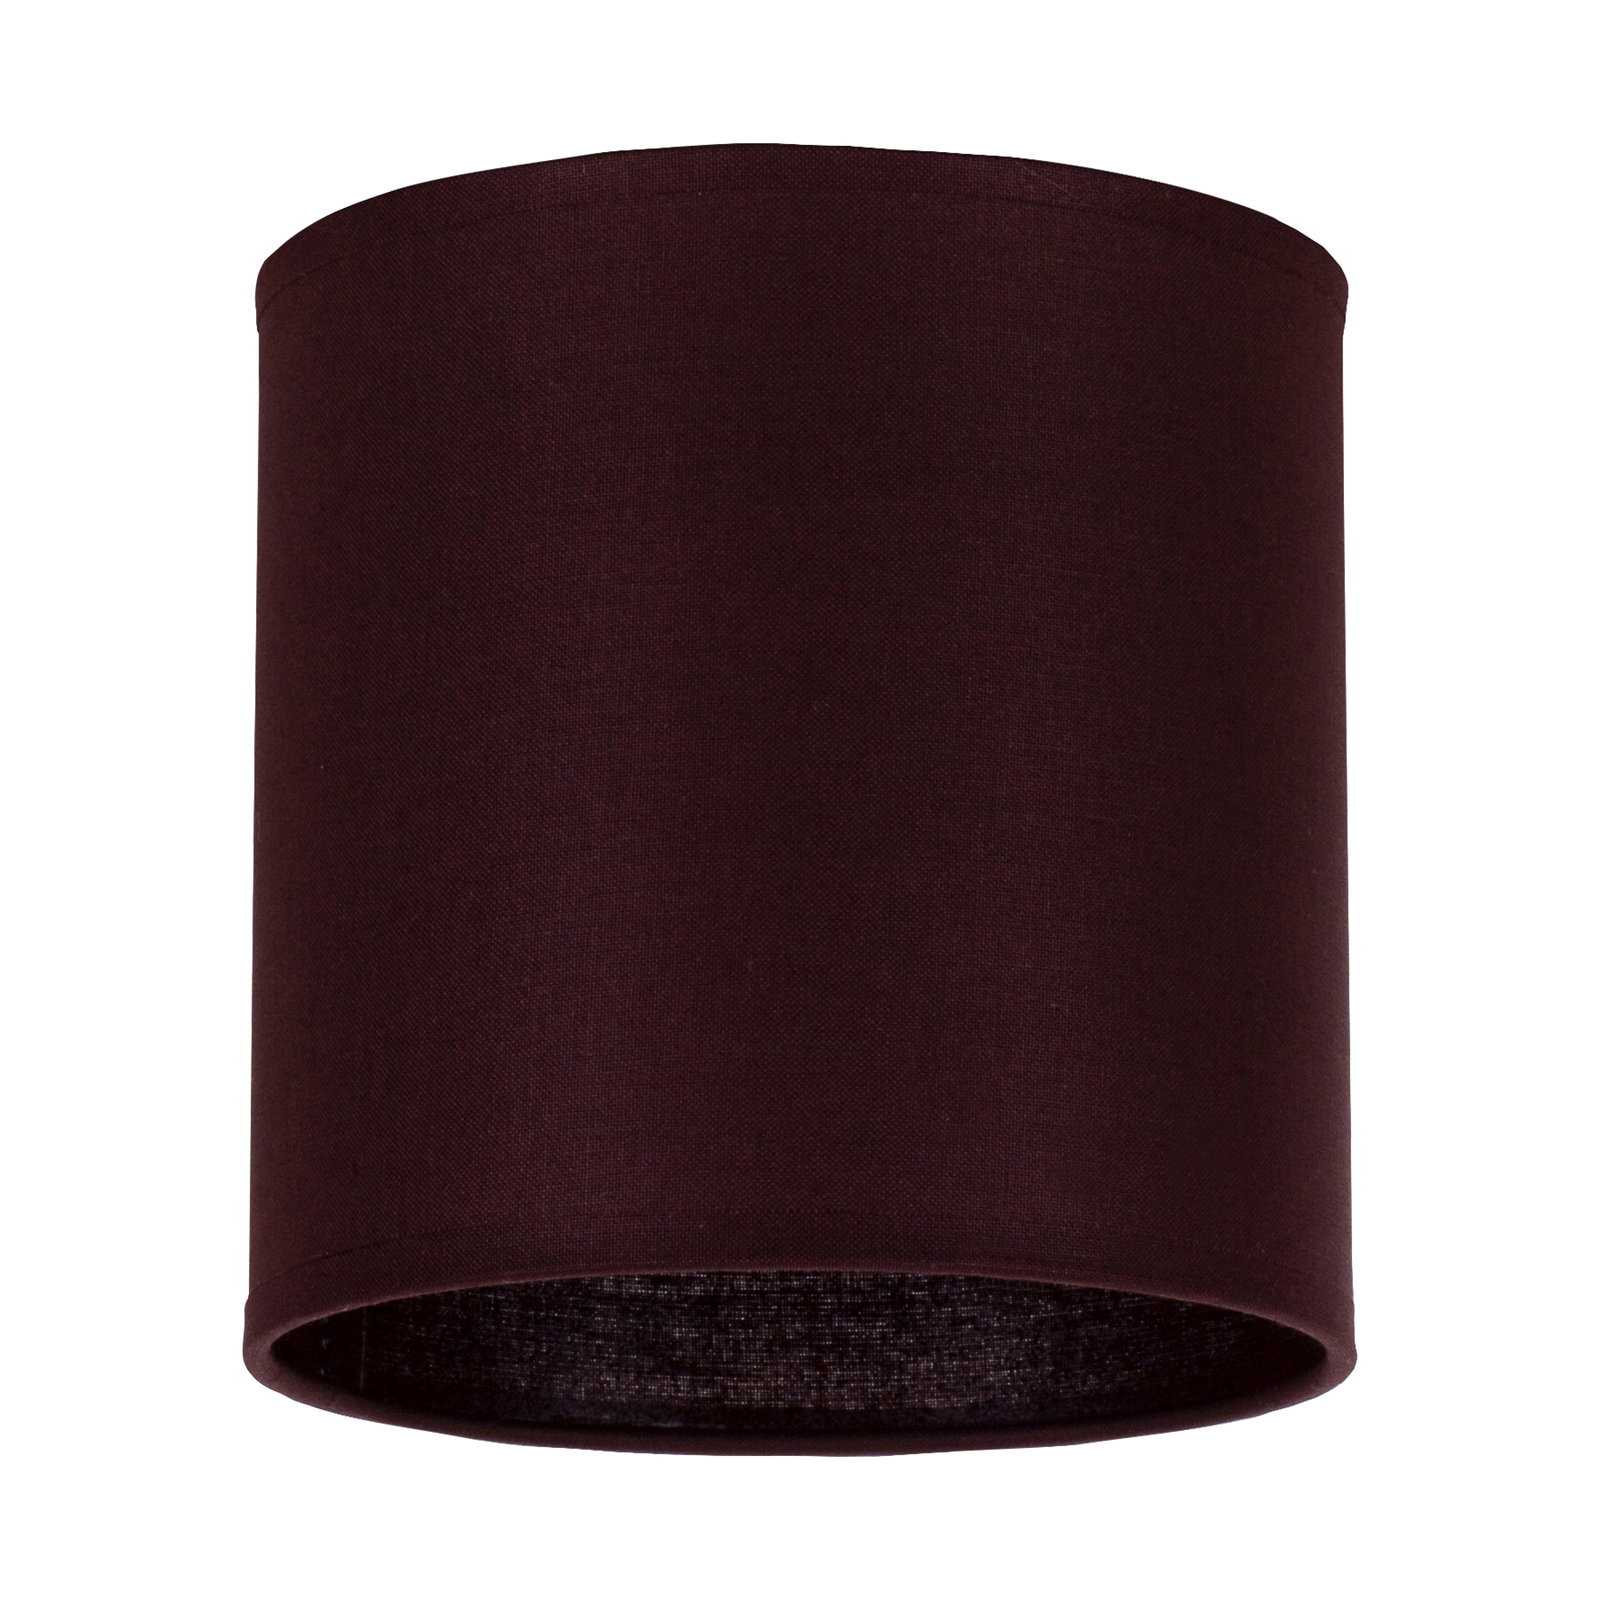 Roller lampshade dark brown Ø 15 cm height 15 cm